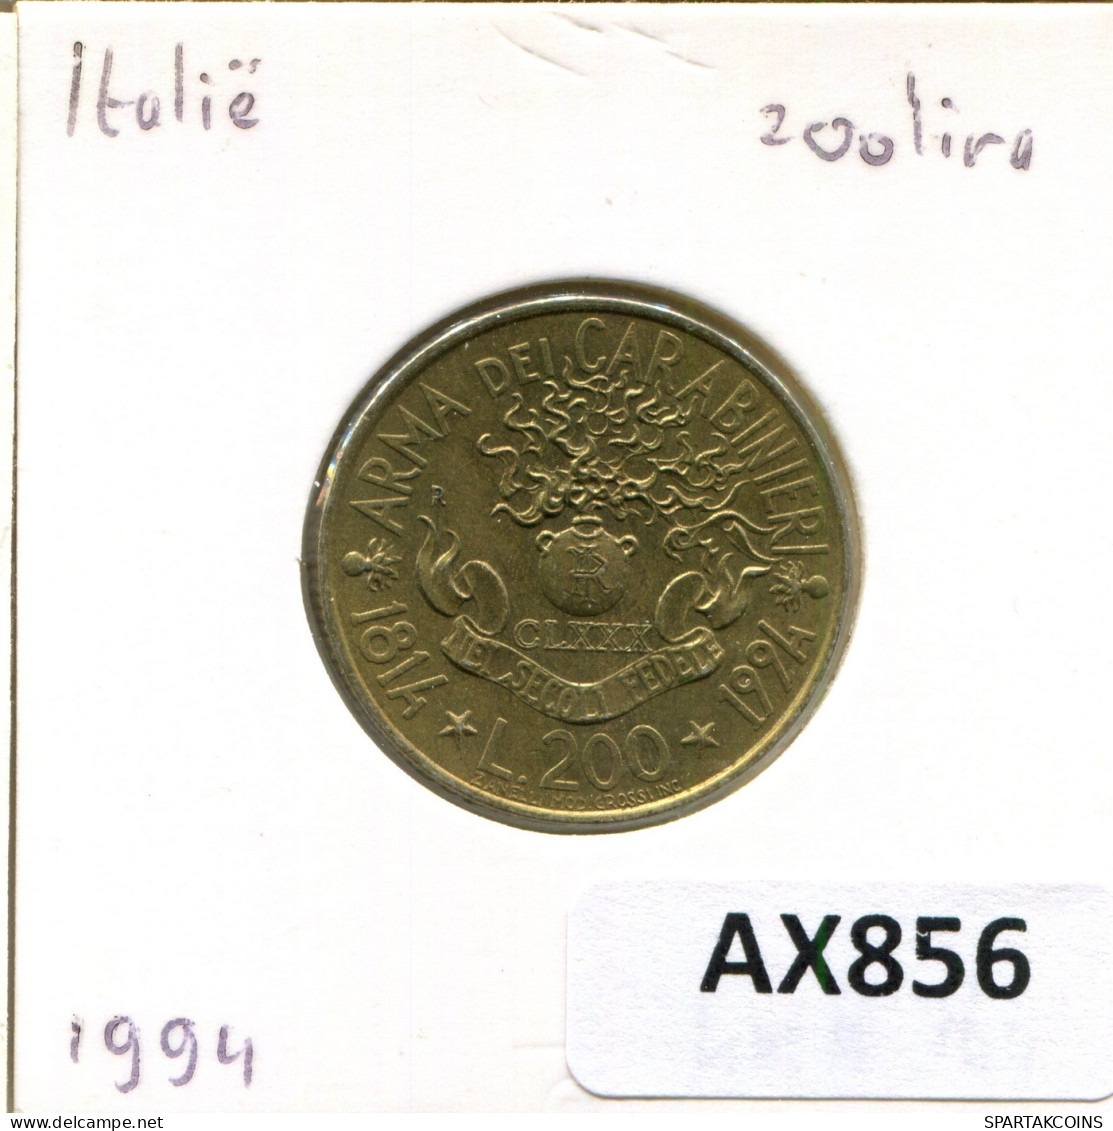 200 LIRE 1994 ITALY Coin #AX856.U.A - 200 Lire